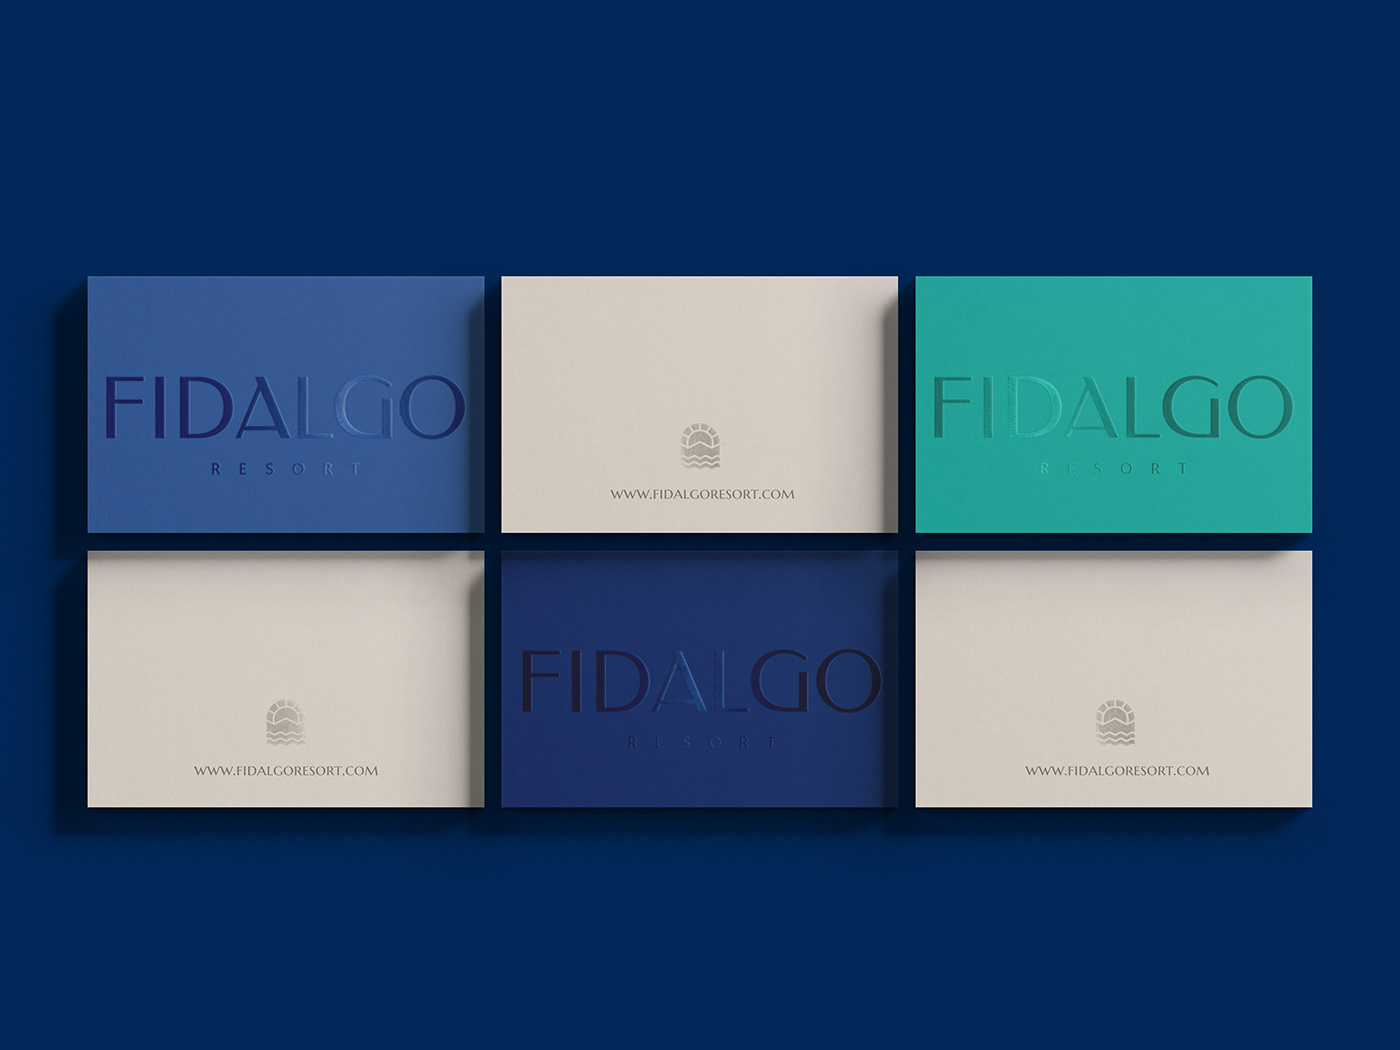 Projeto de Identidade Visual Fidalgo Resort, papeleria, rebranding, branding.